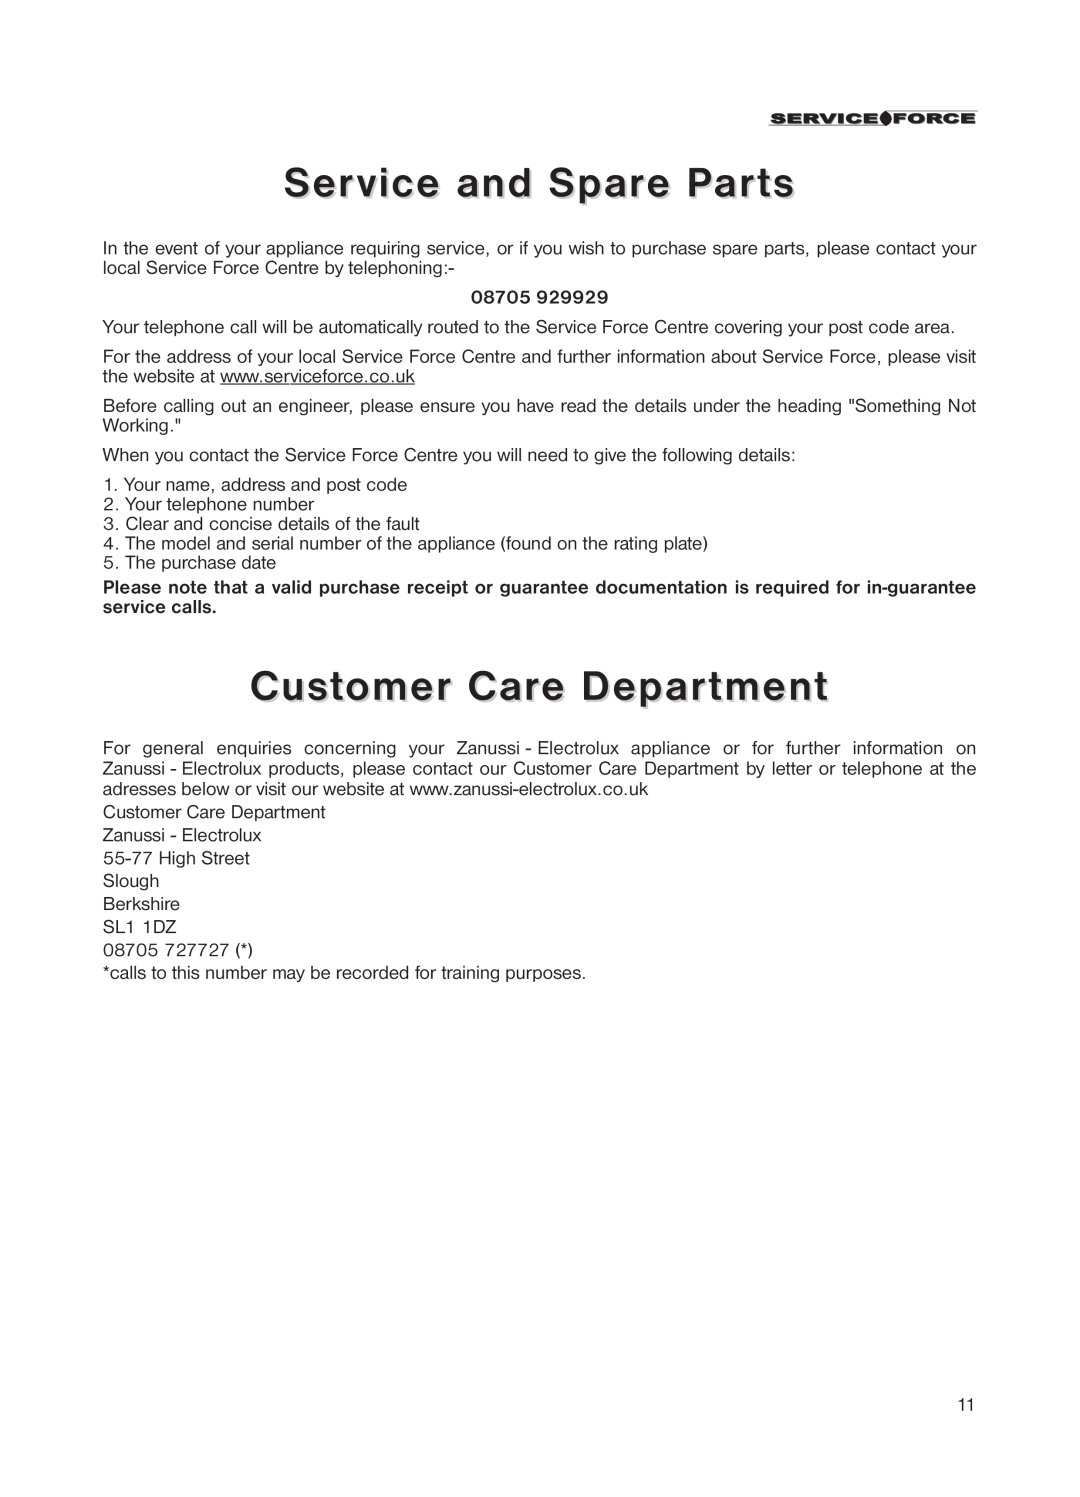 Zanussi ZEUT 6245 manual Service and Spare Parts, Customer Care Department, 08705 